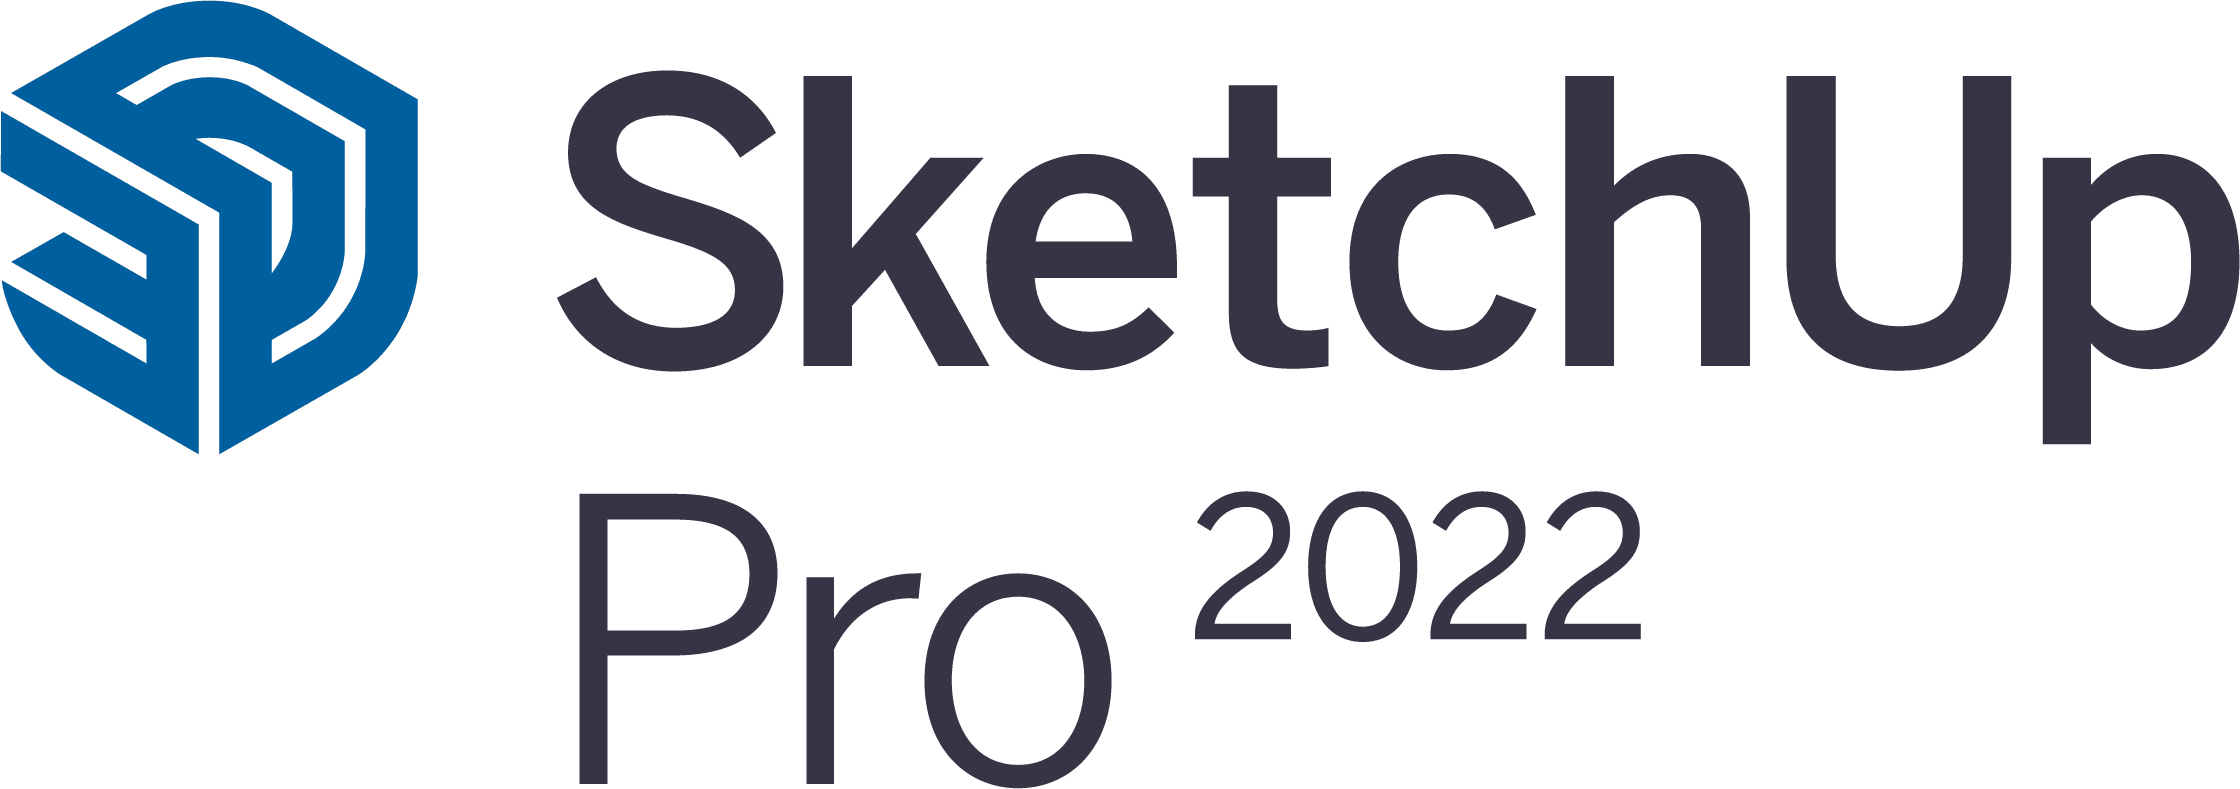 SketchUp Pro 2022 Vertical RGB